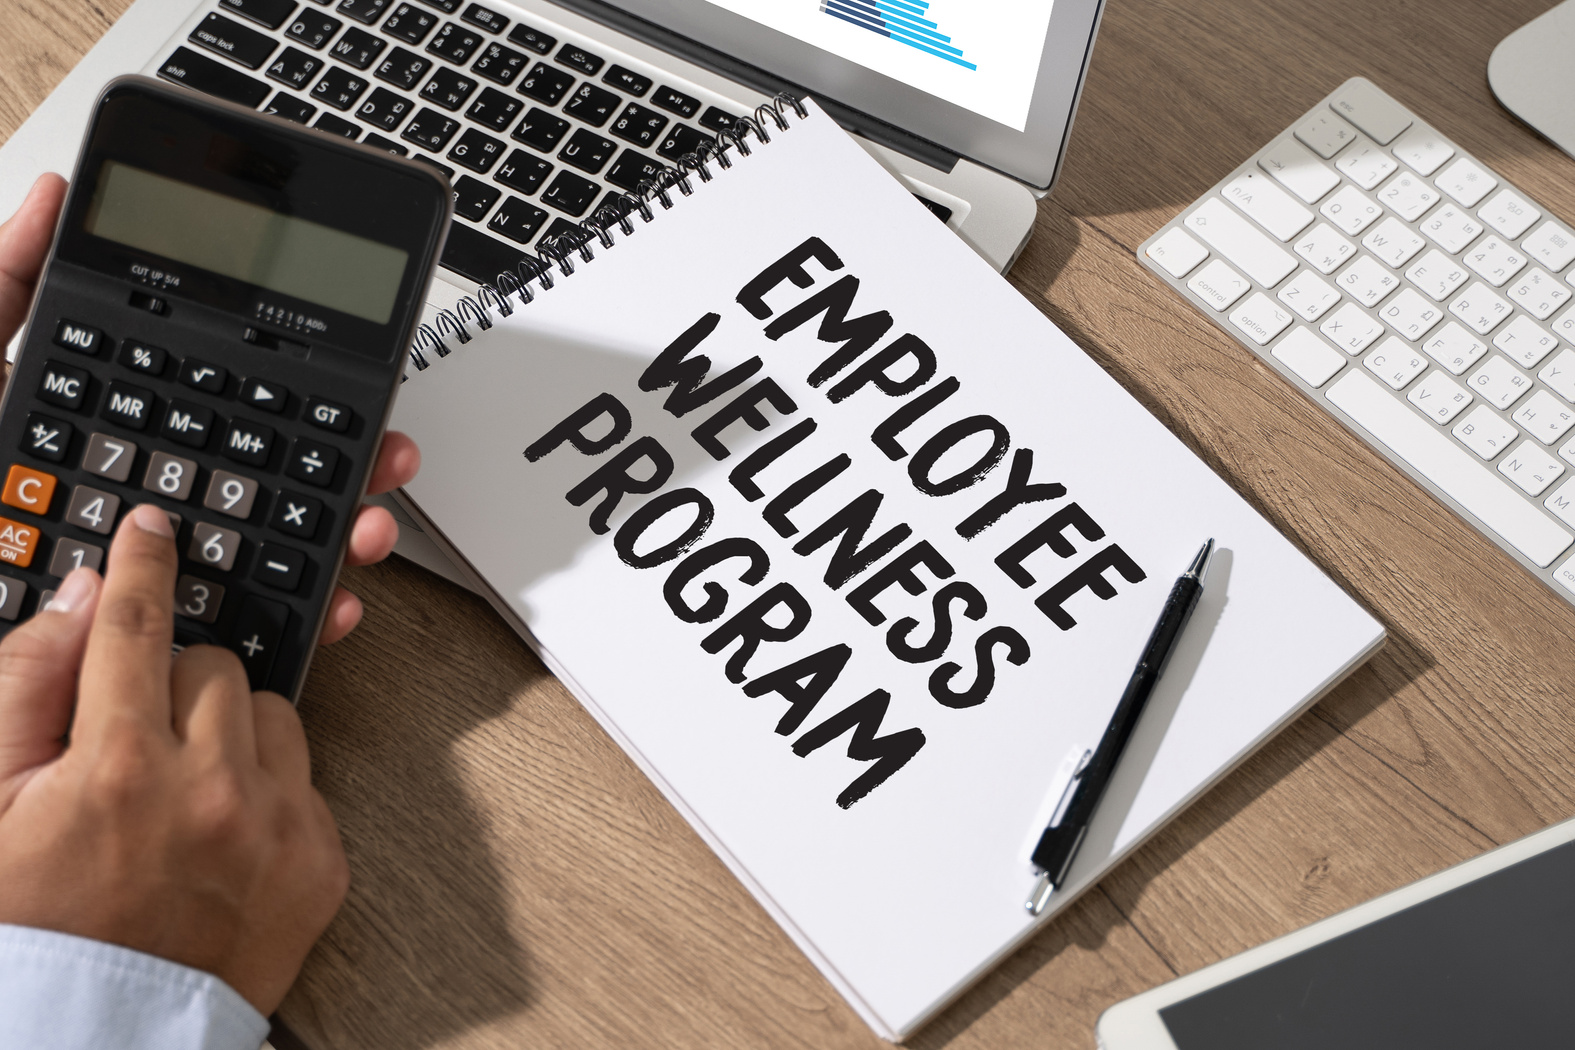 Employee Wellness program and Managing Employee Health ,